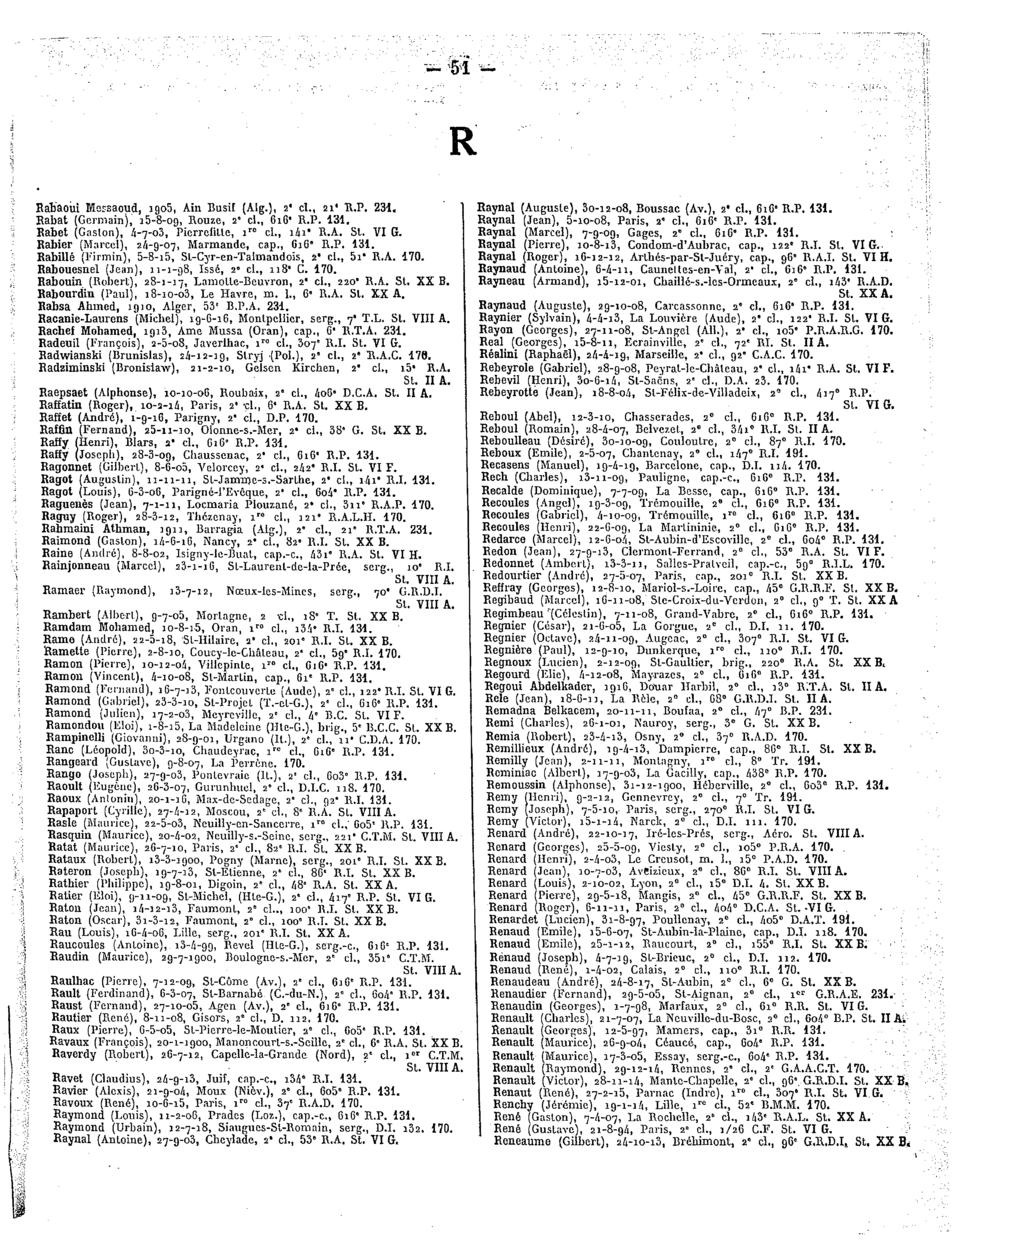 ï. m «-' R Rabaoiii Messaoud, igo5,ainbusit(alg.), 2"cl.,21'R.P.231. Raynal (Auguste), 30-12-08, Boussac (Av.), 2*cl.,61G'R.P. 131. Rabat(Germain), 15-8-09, Rouze,2' cl.,616"r.p.131. Raynal(Jean),5-10-08, Paris,2«cl.